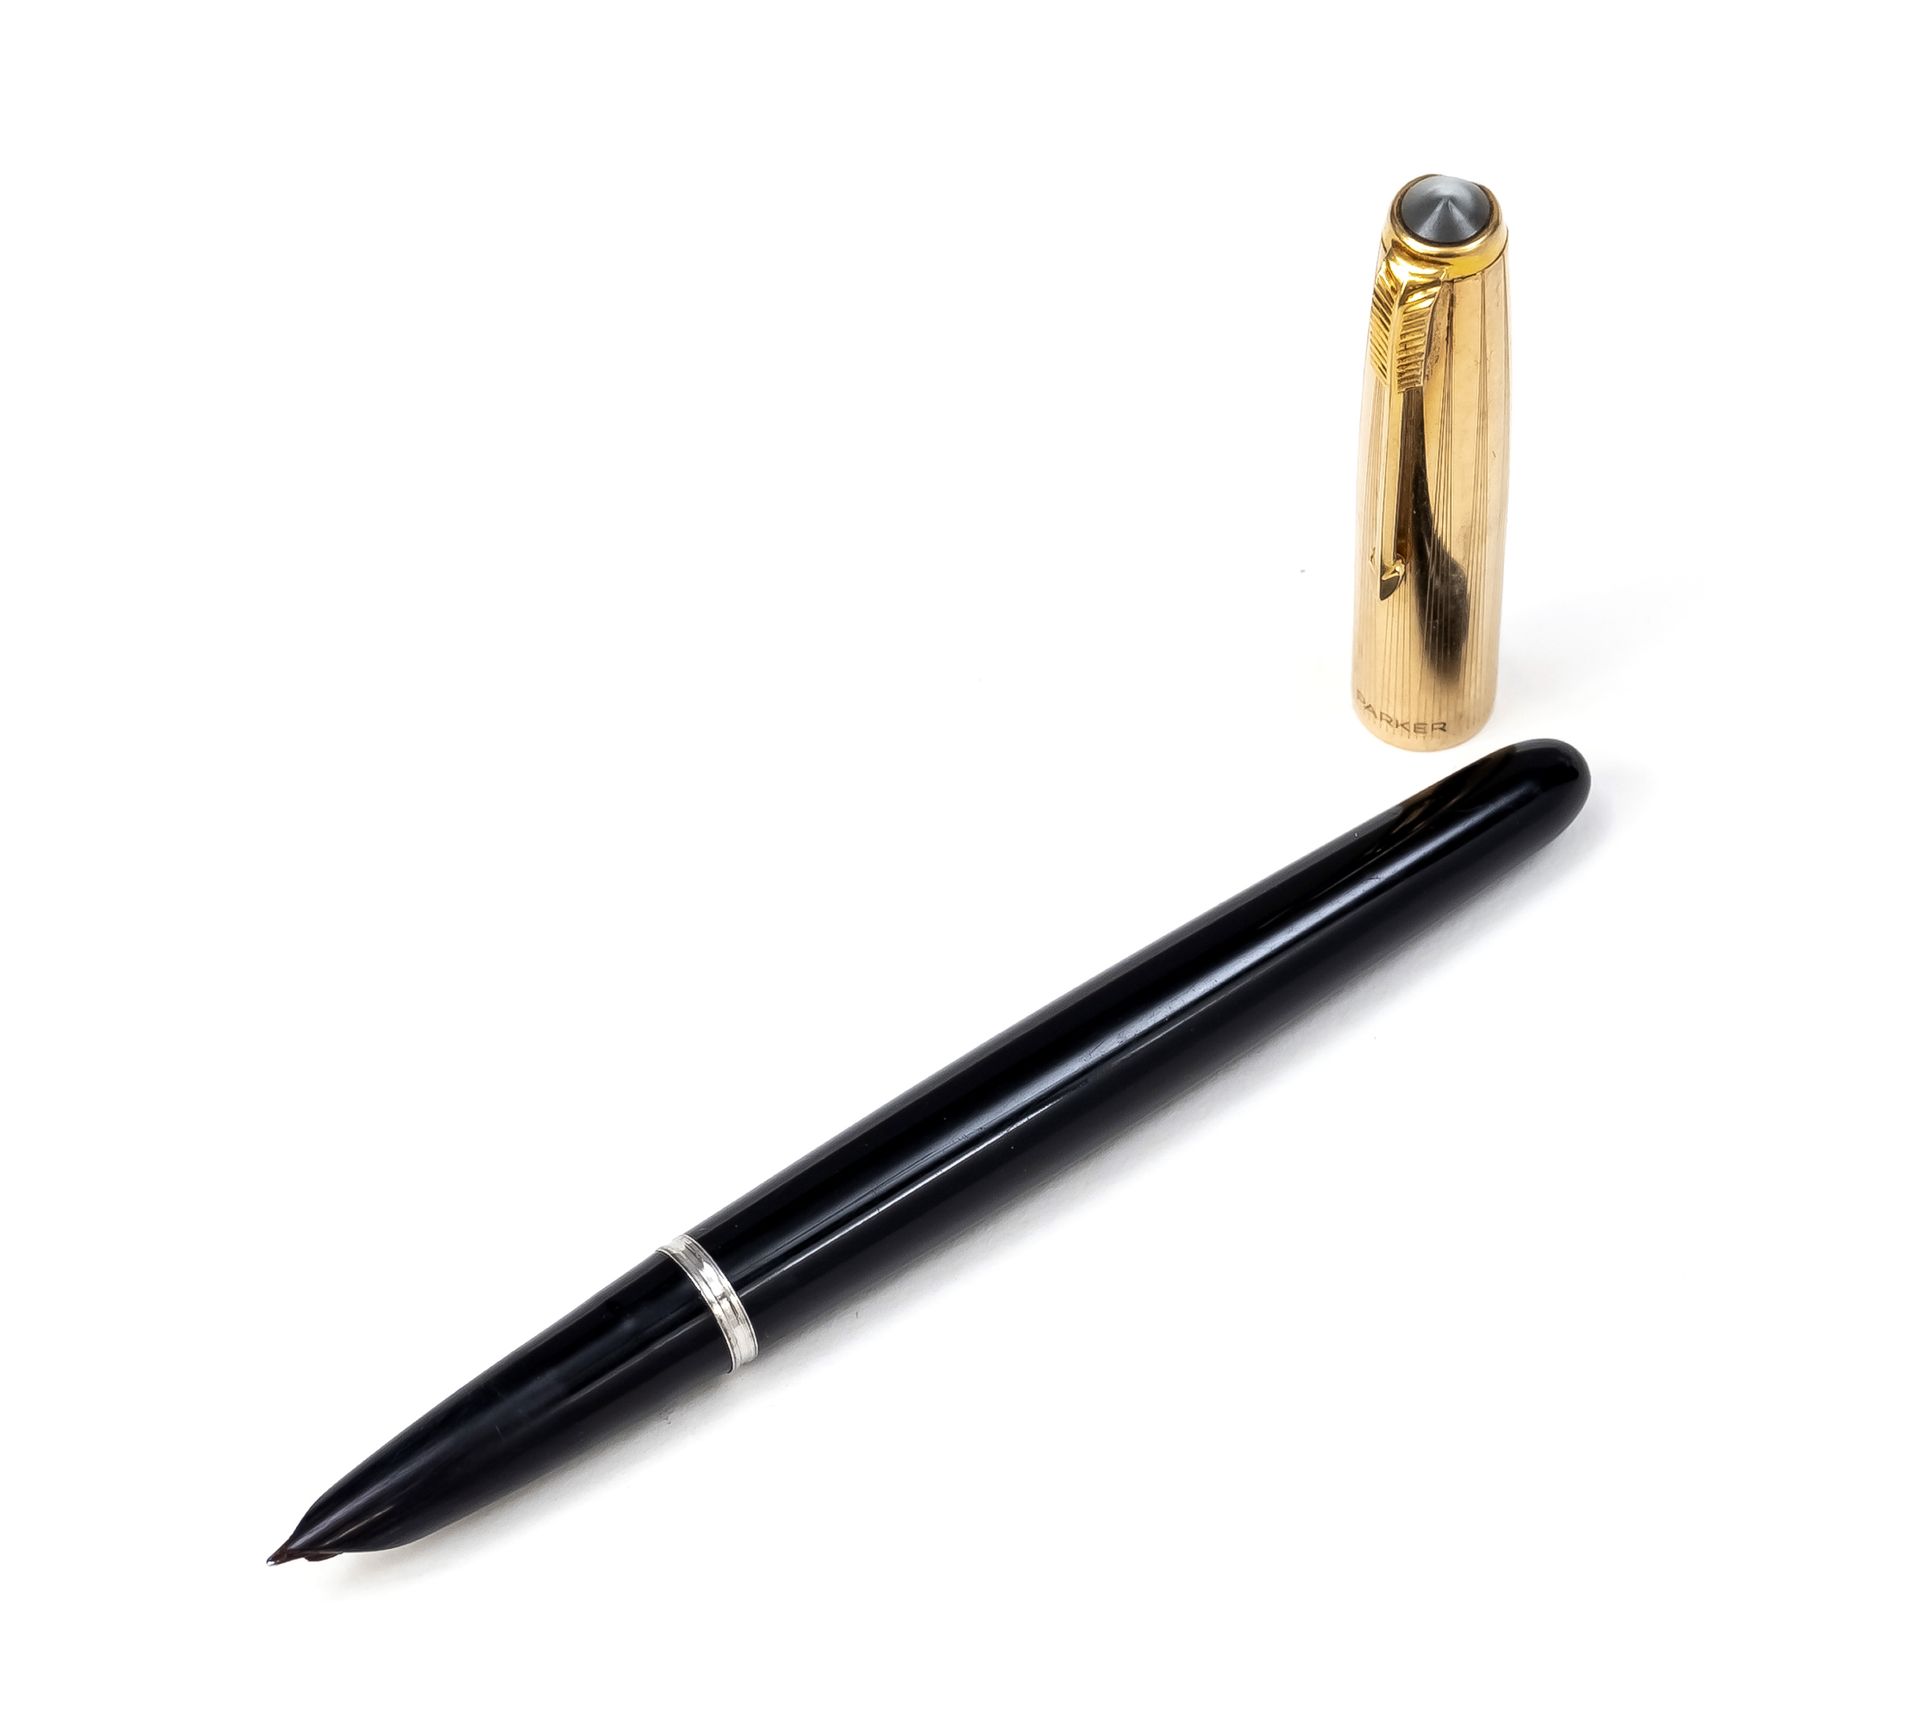 Null 派克转换器钢笔，20世纪下半叶，英国制造，黑色外壳，镀金笔帽，长13.7厘米